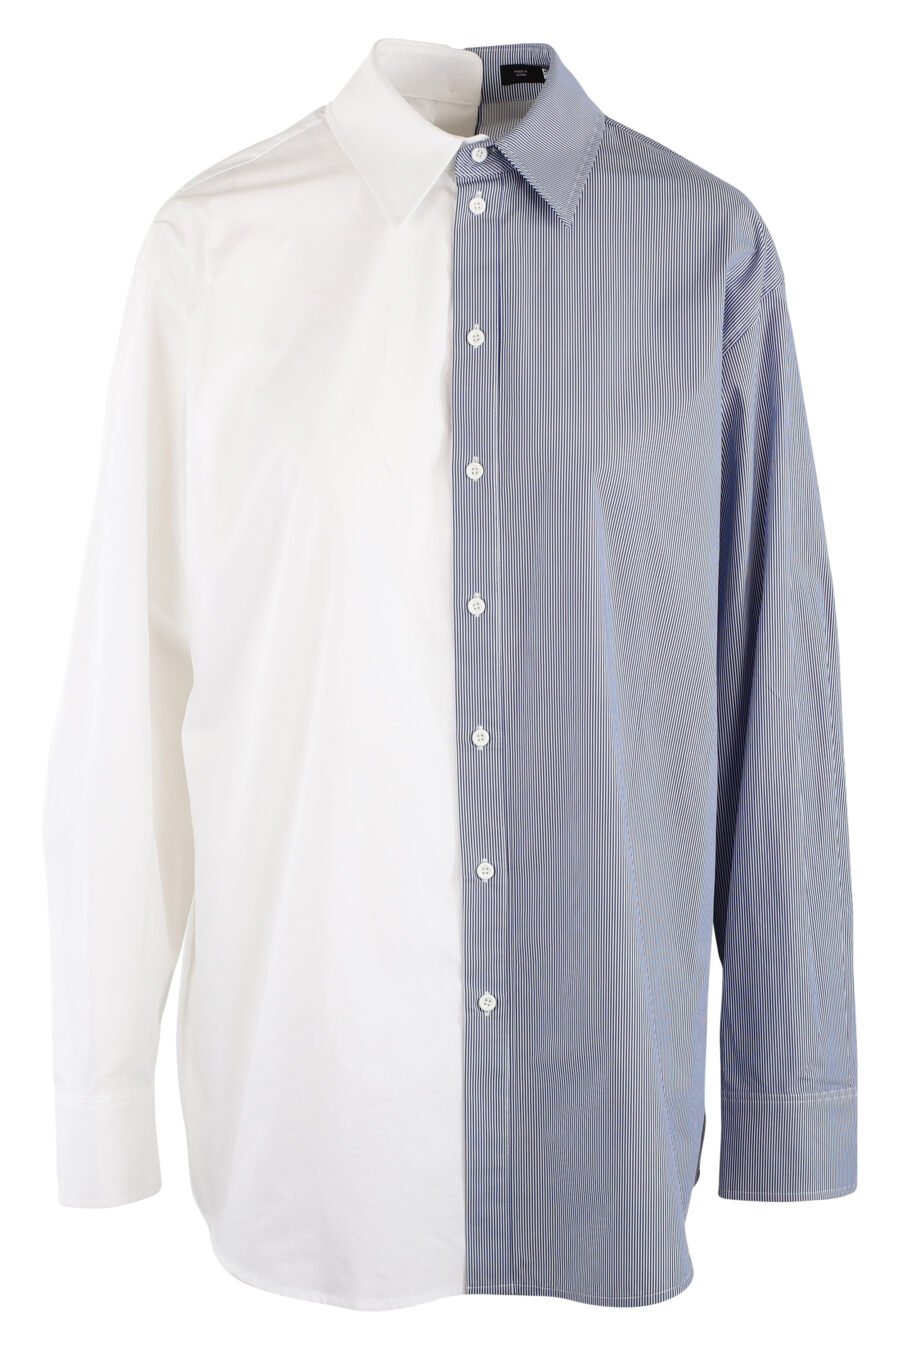 Chemise bicolore blanche et bleue - IMG 5494